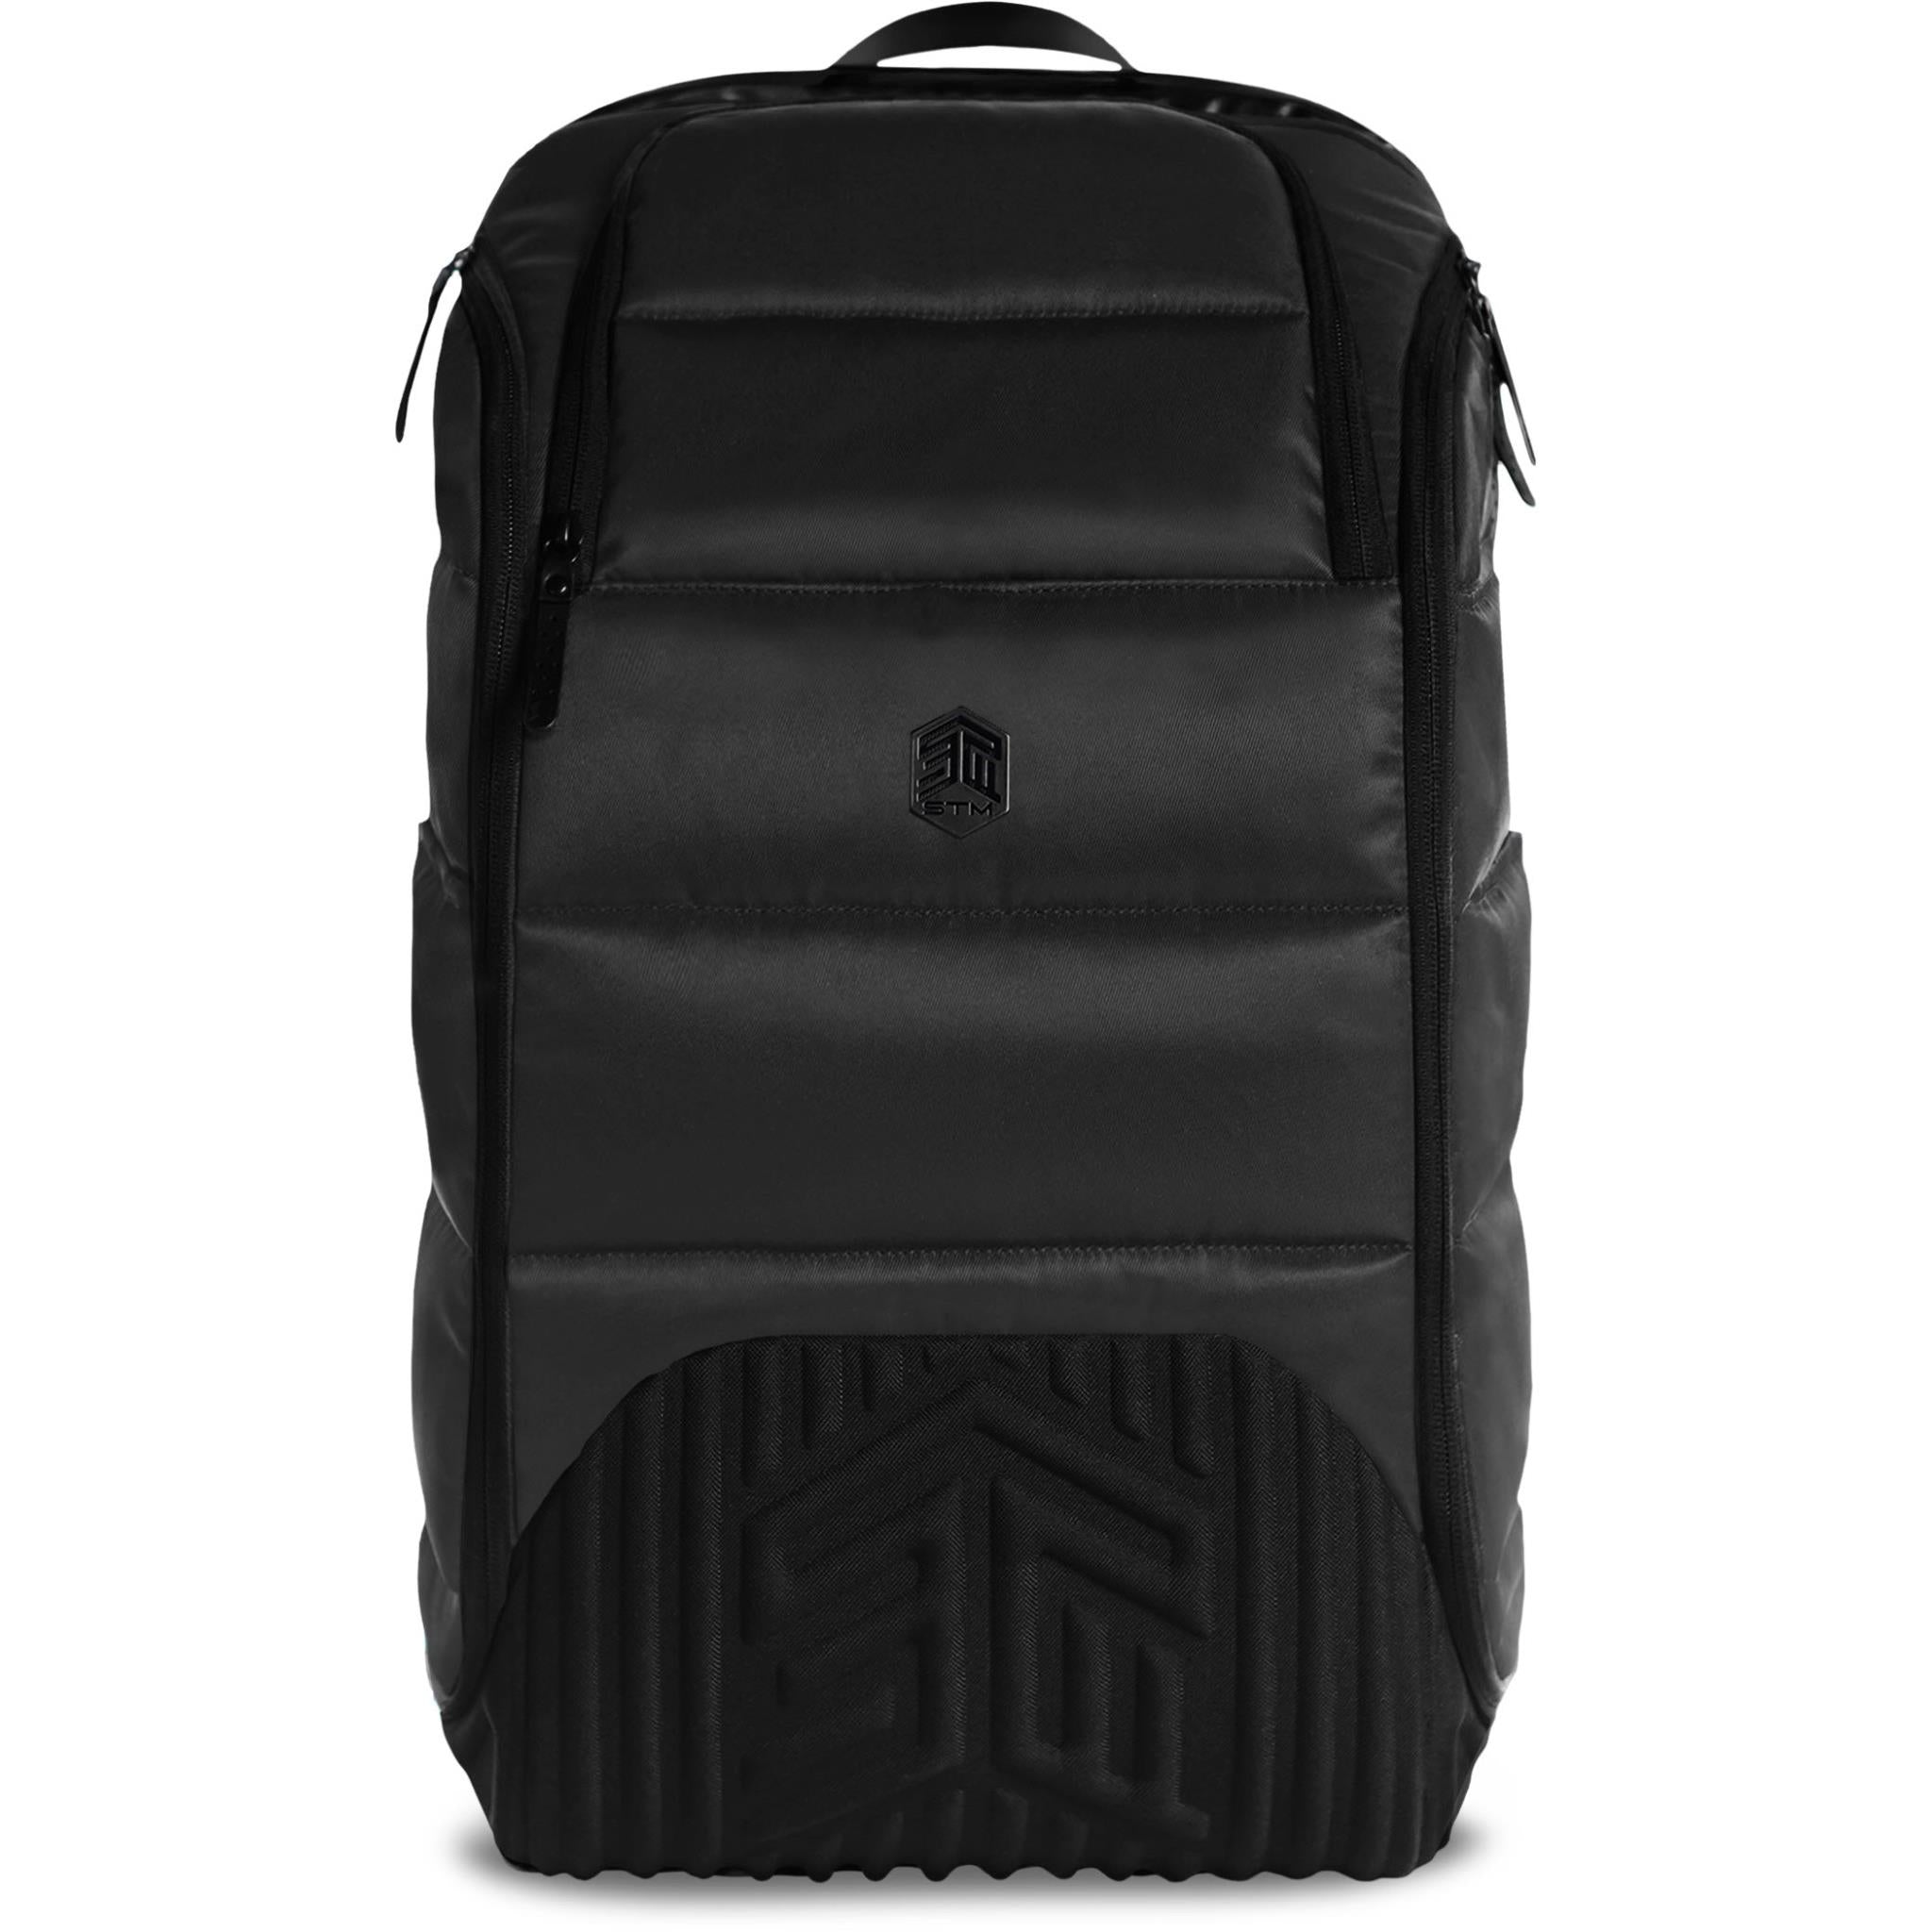 kd max air viii backpack $10